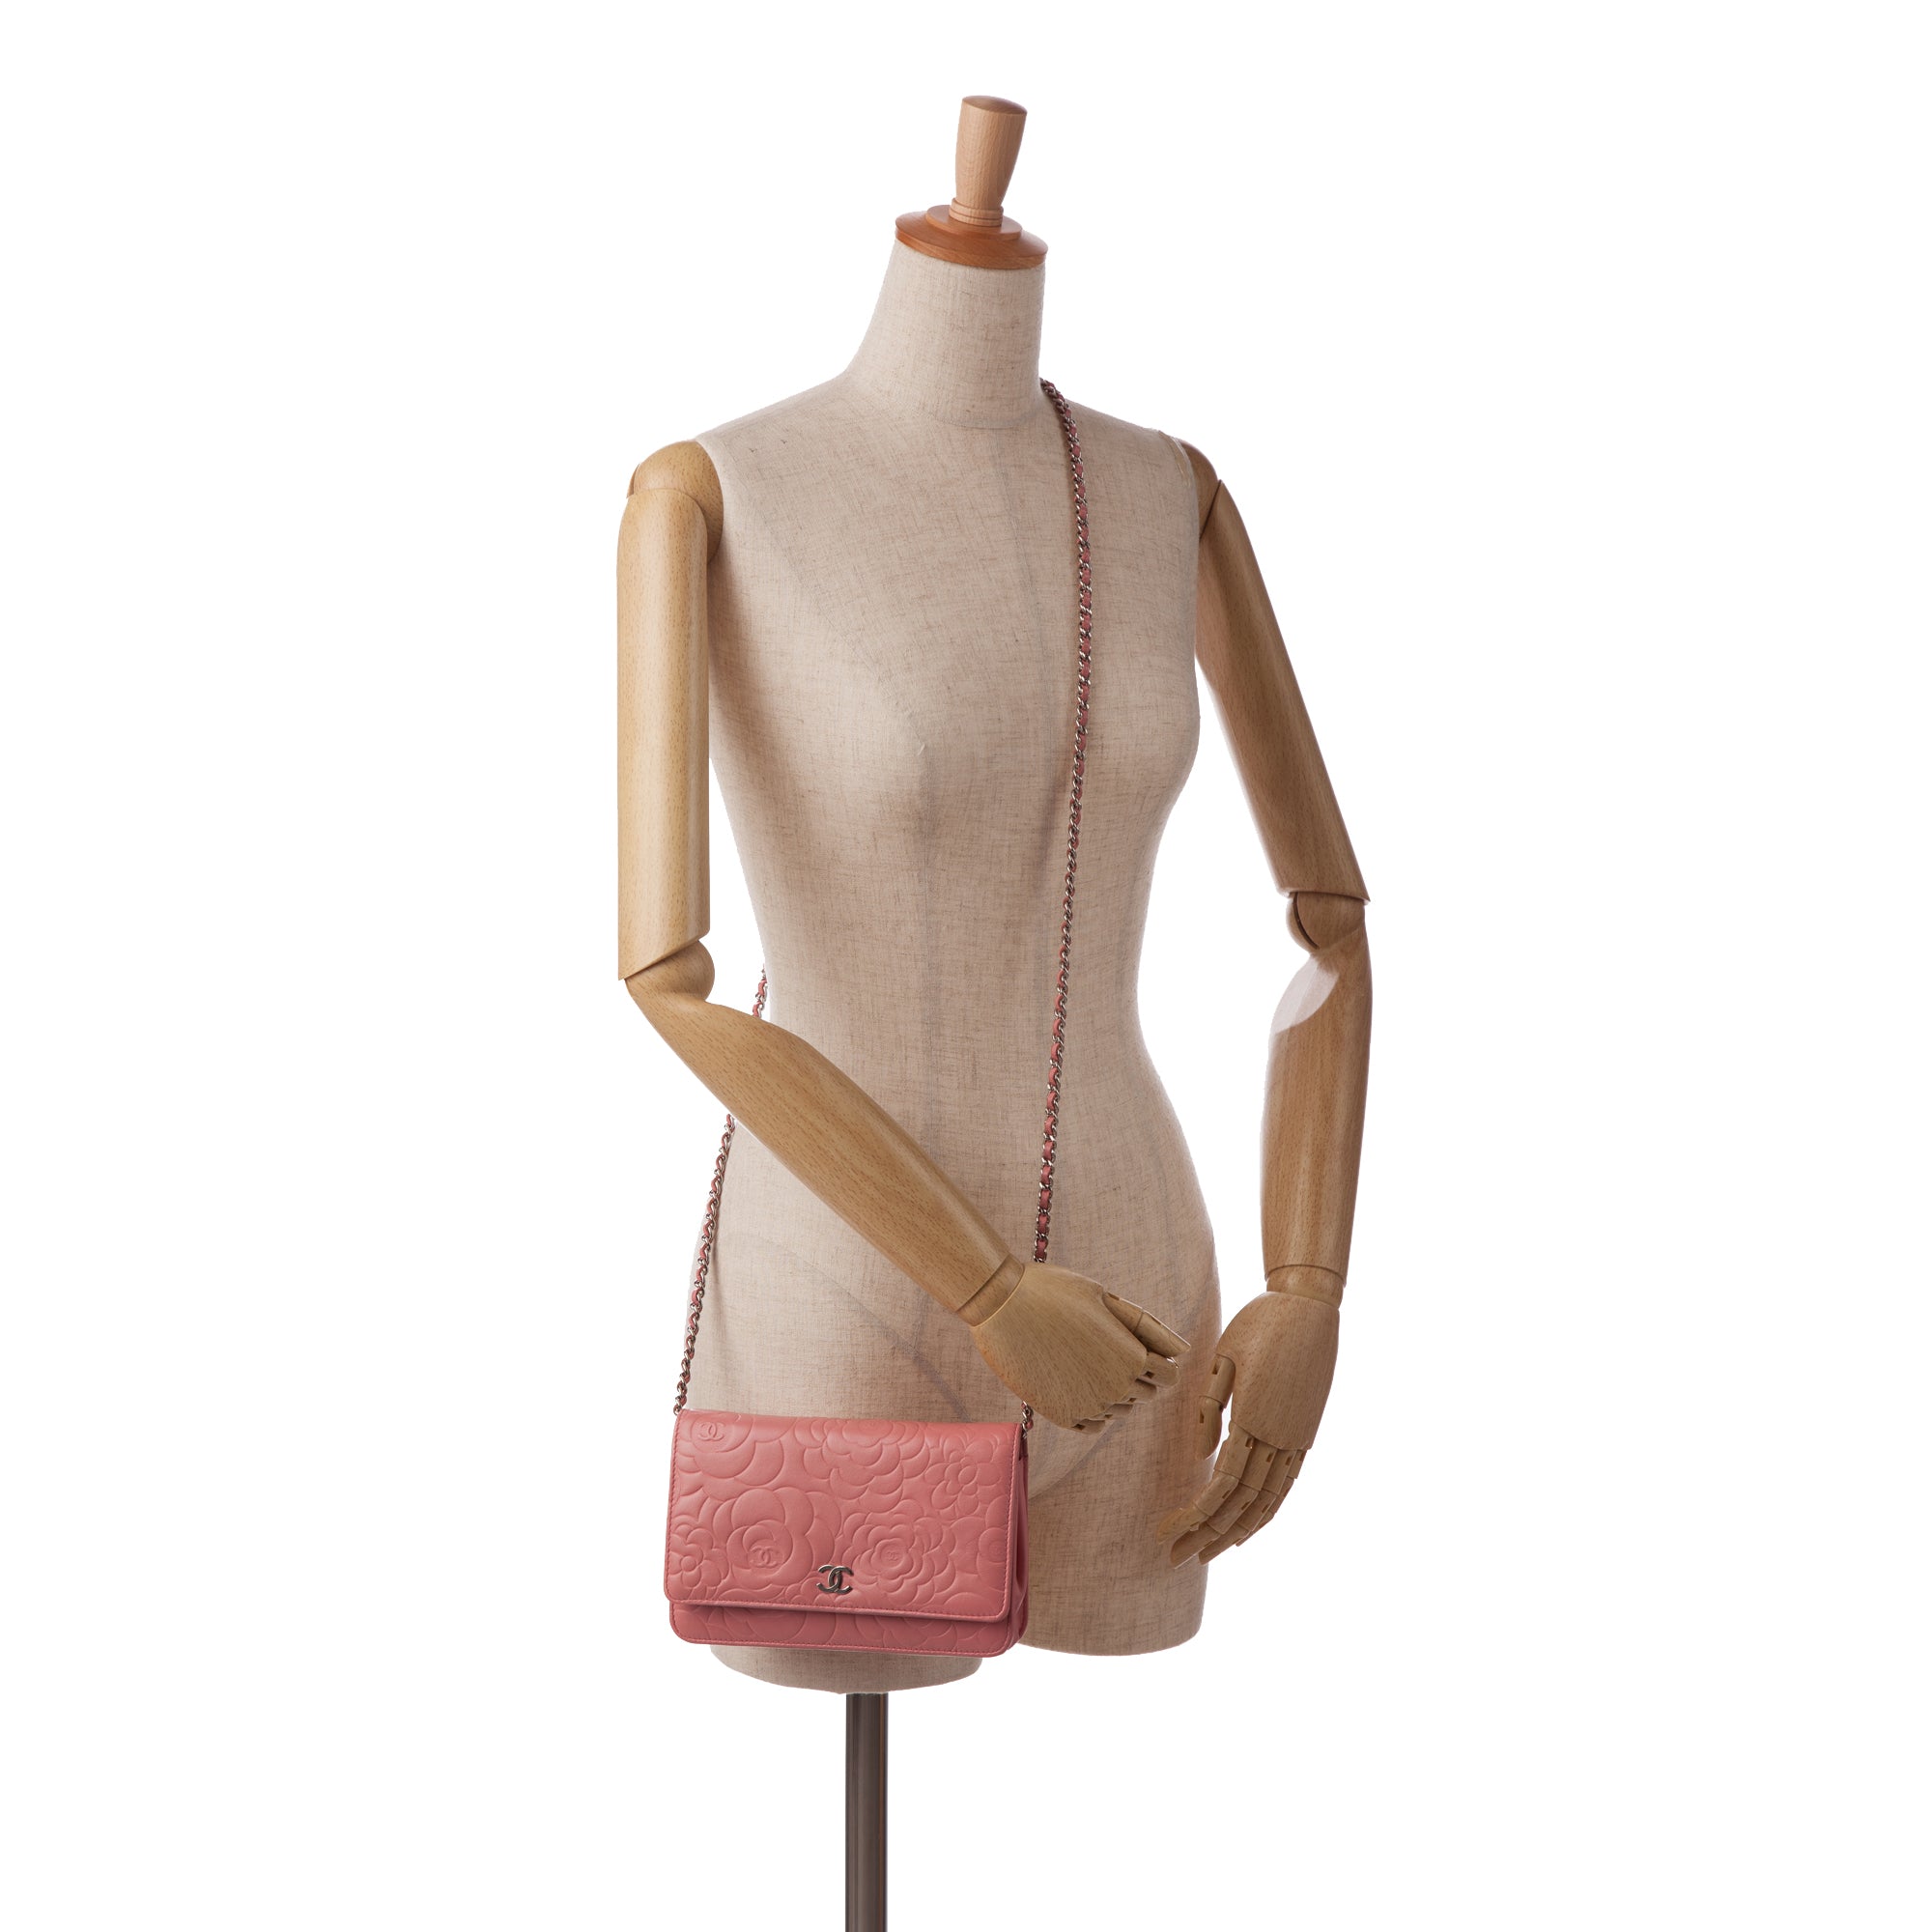 Chanel Lambskin Quilted Camellia Zip Around Wristlet Wallet Pink -  MyDesignerly